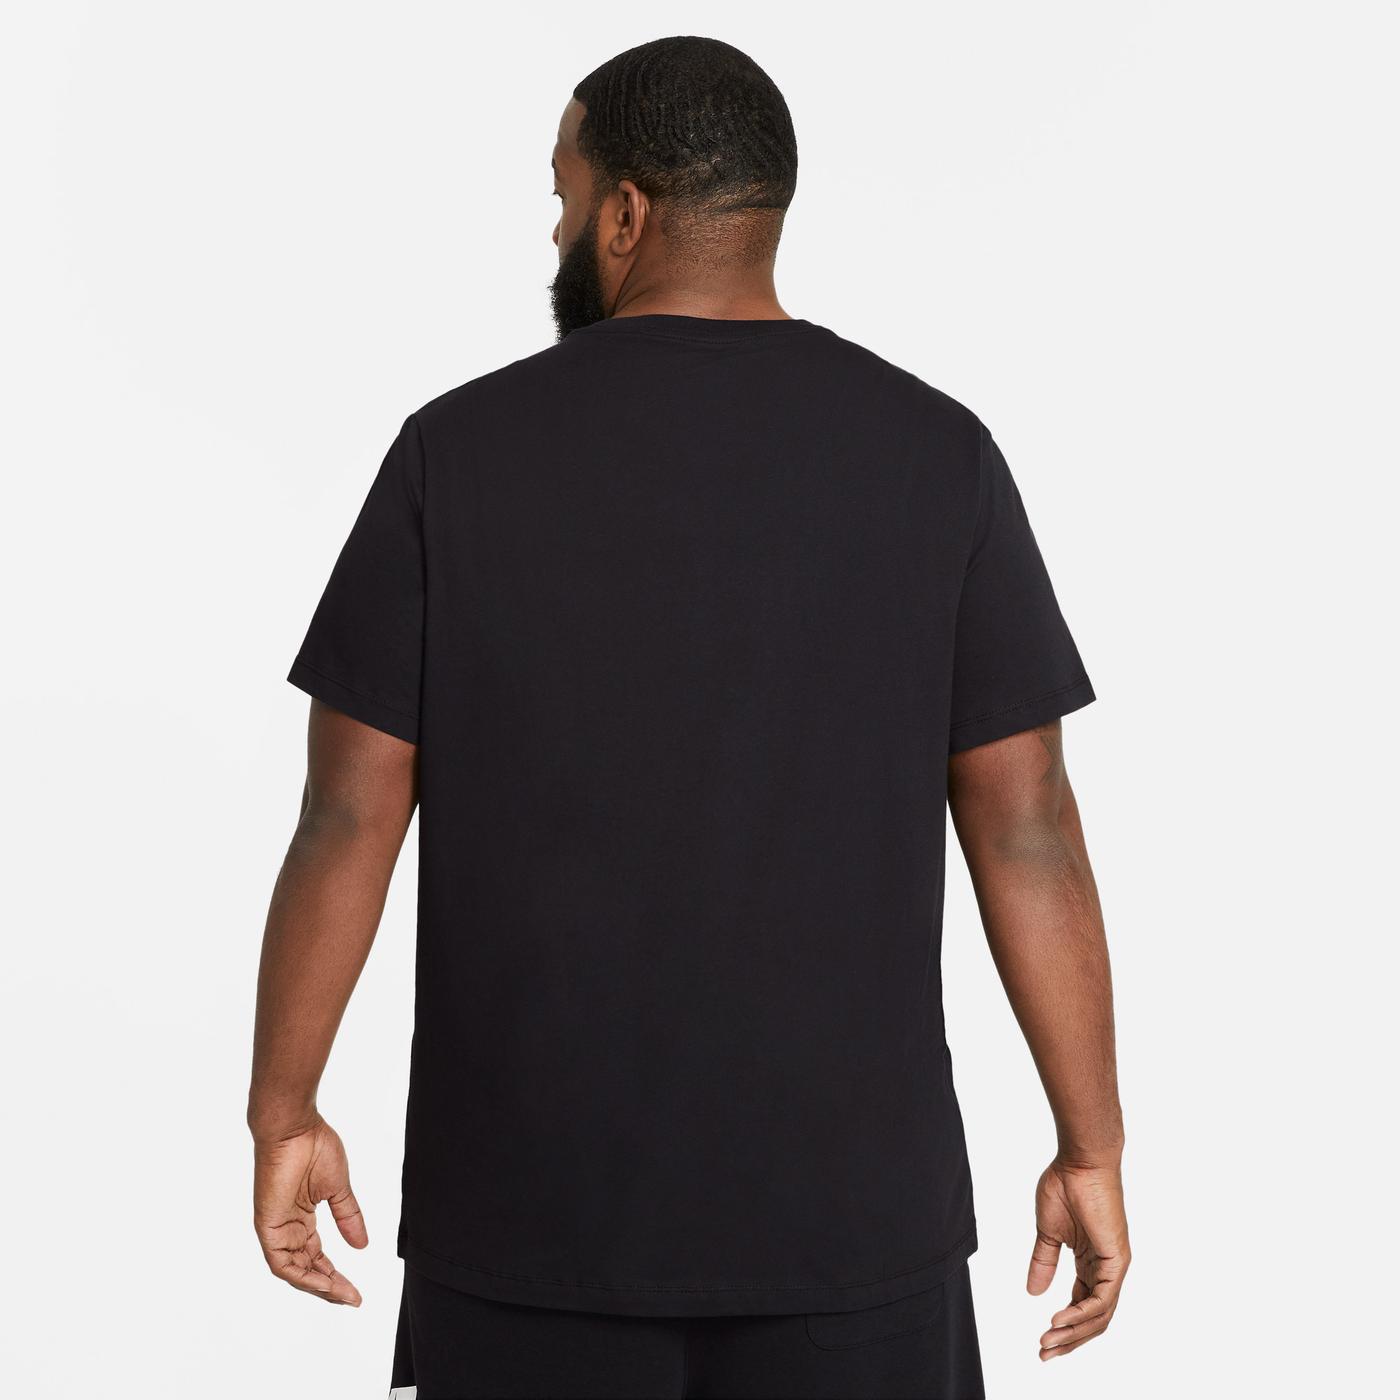 Nike Icon Futura Erkek Siyah T-Shirt